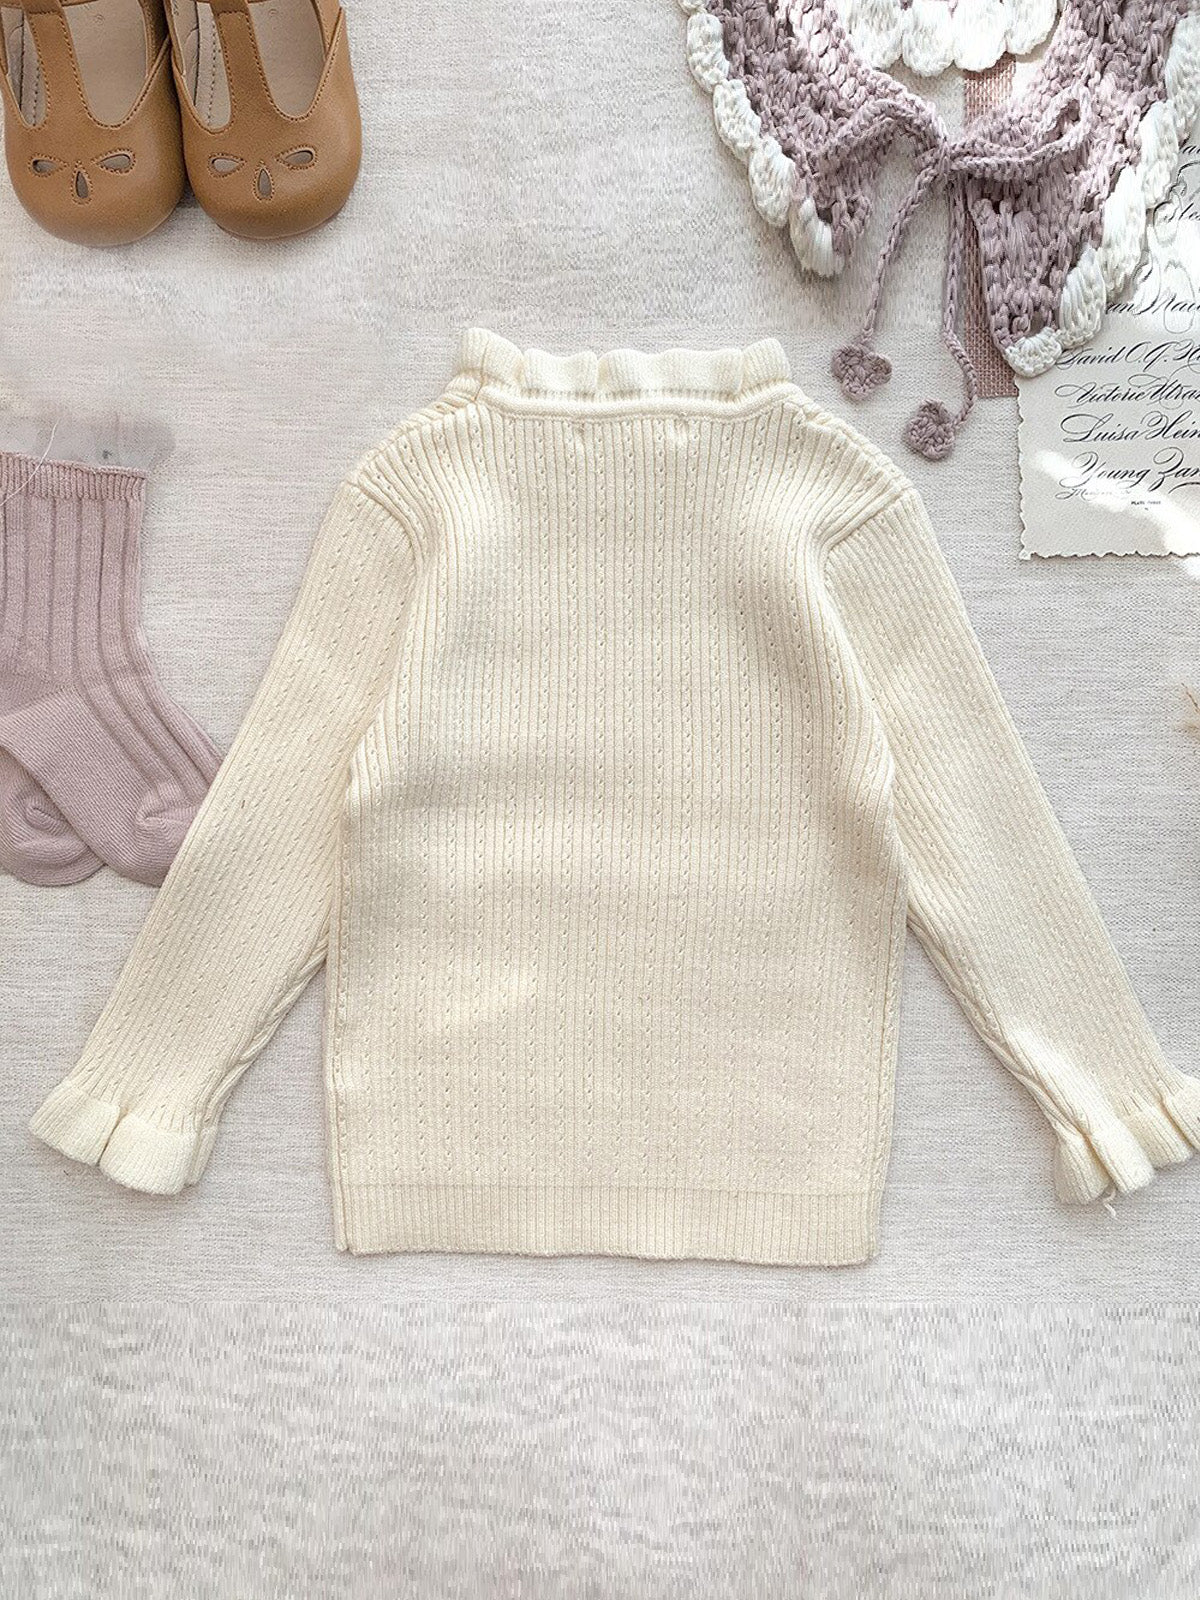 Mia Belle Girls Ruffle Collar Knit Sweater | Girls Fall Outfits